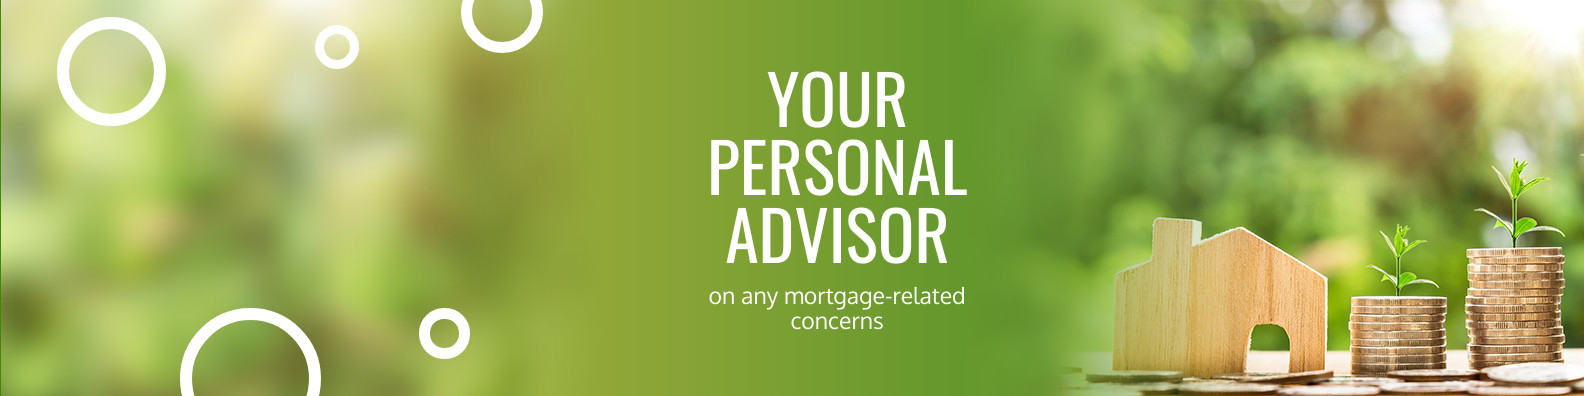 Your Personal Mortgage Advisor Linkedin Profile BG